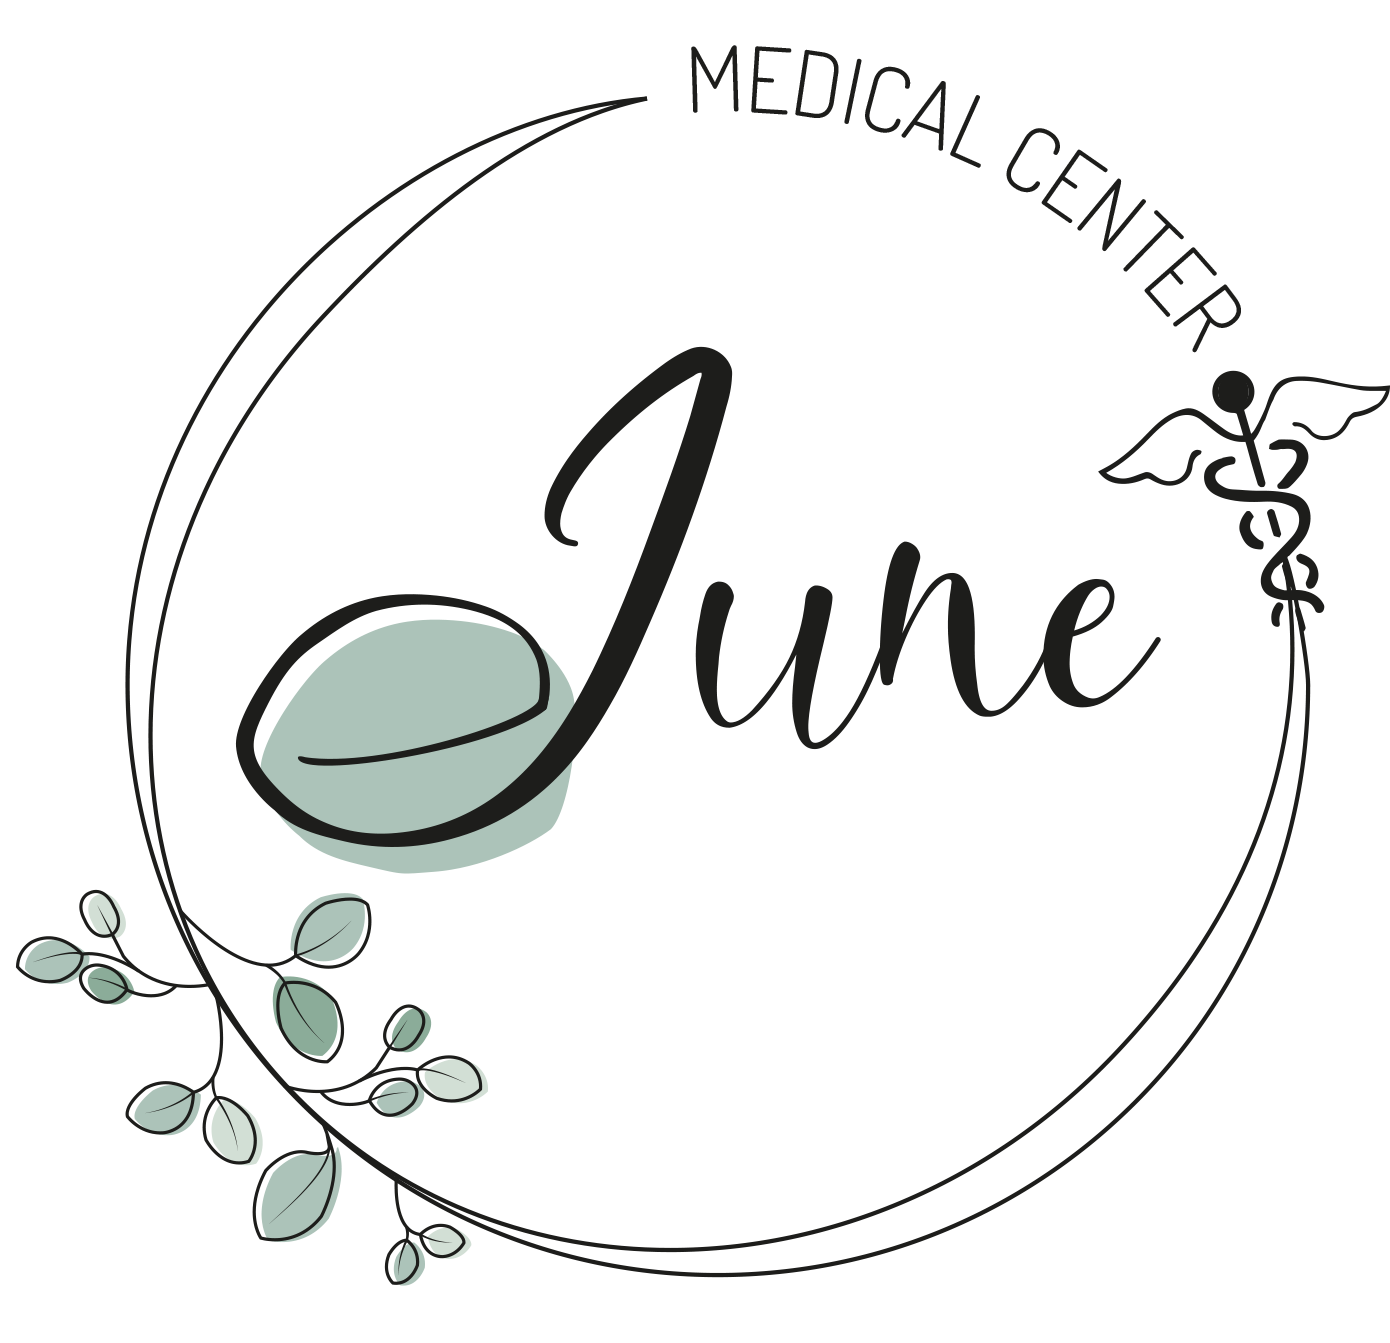 June Medical Center